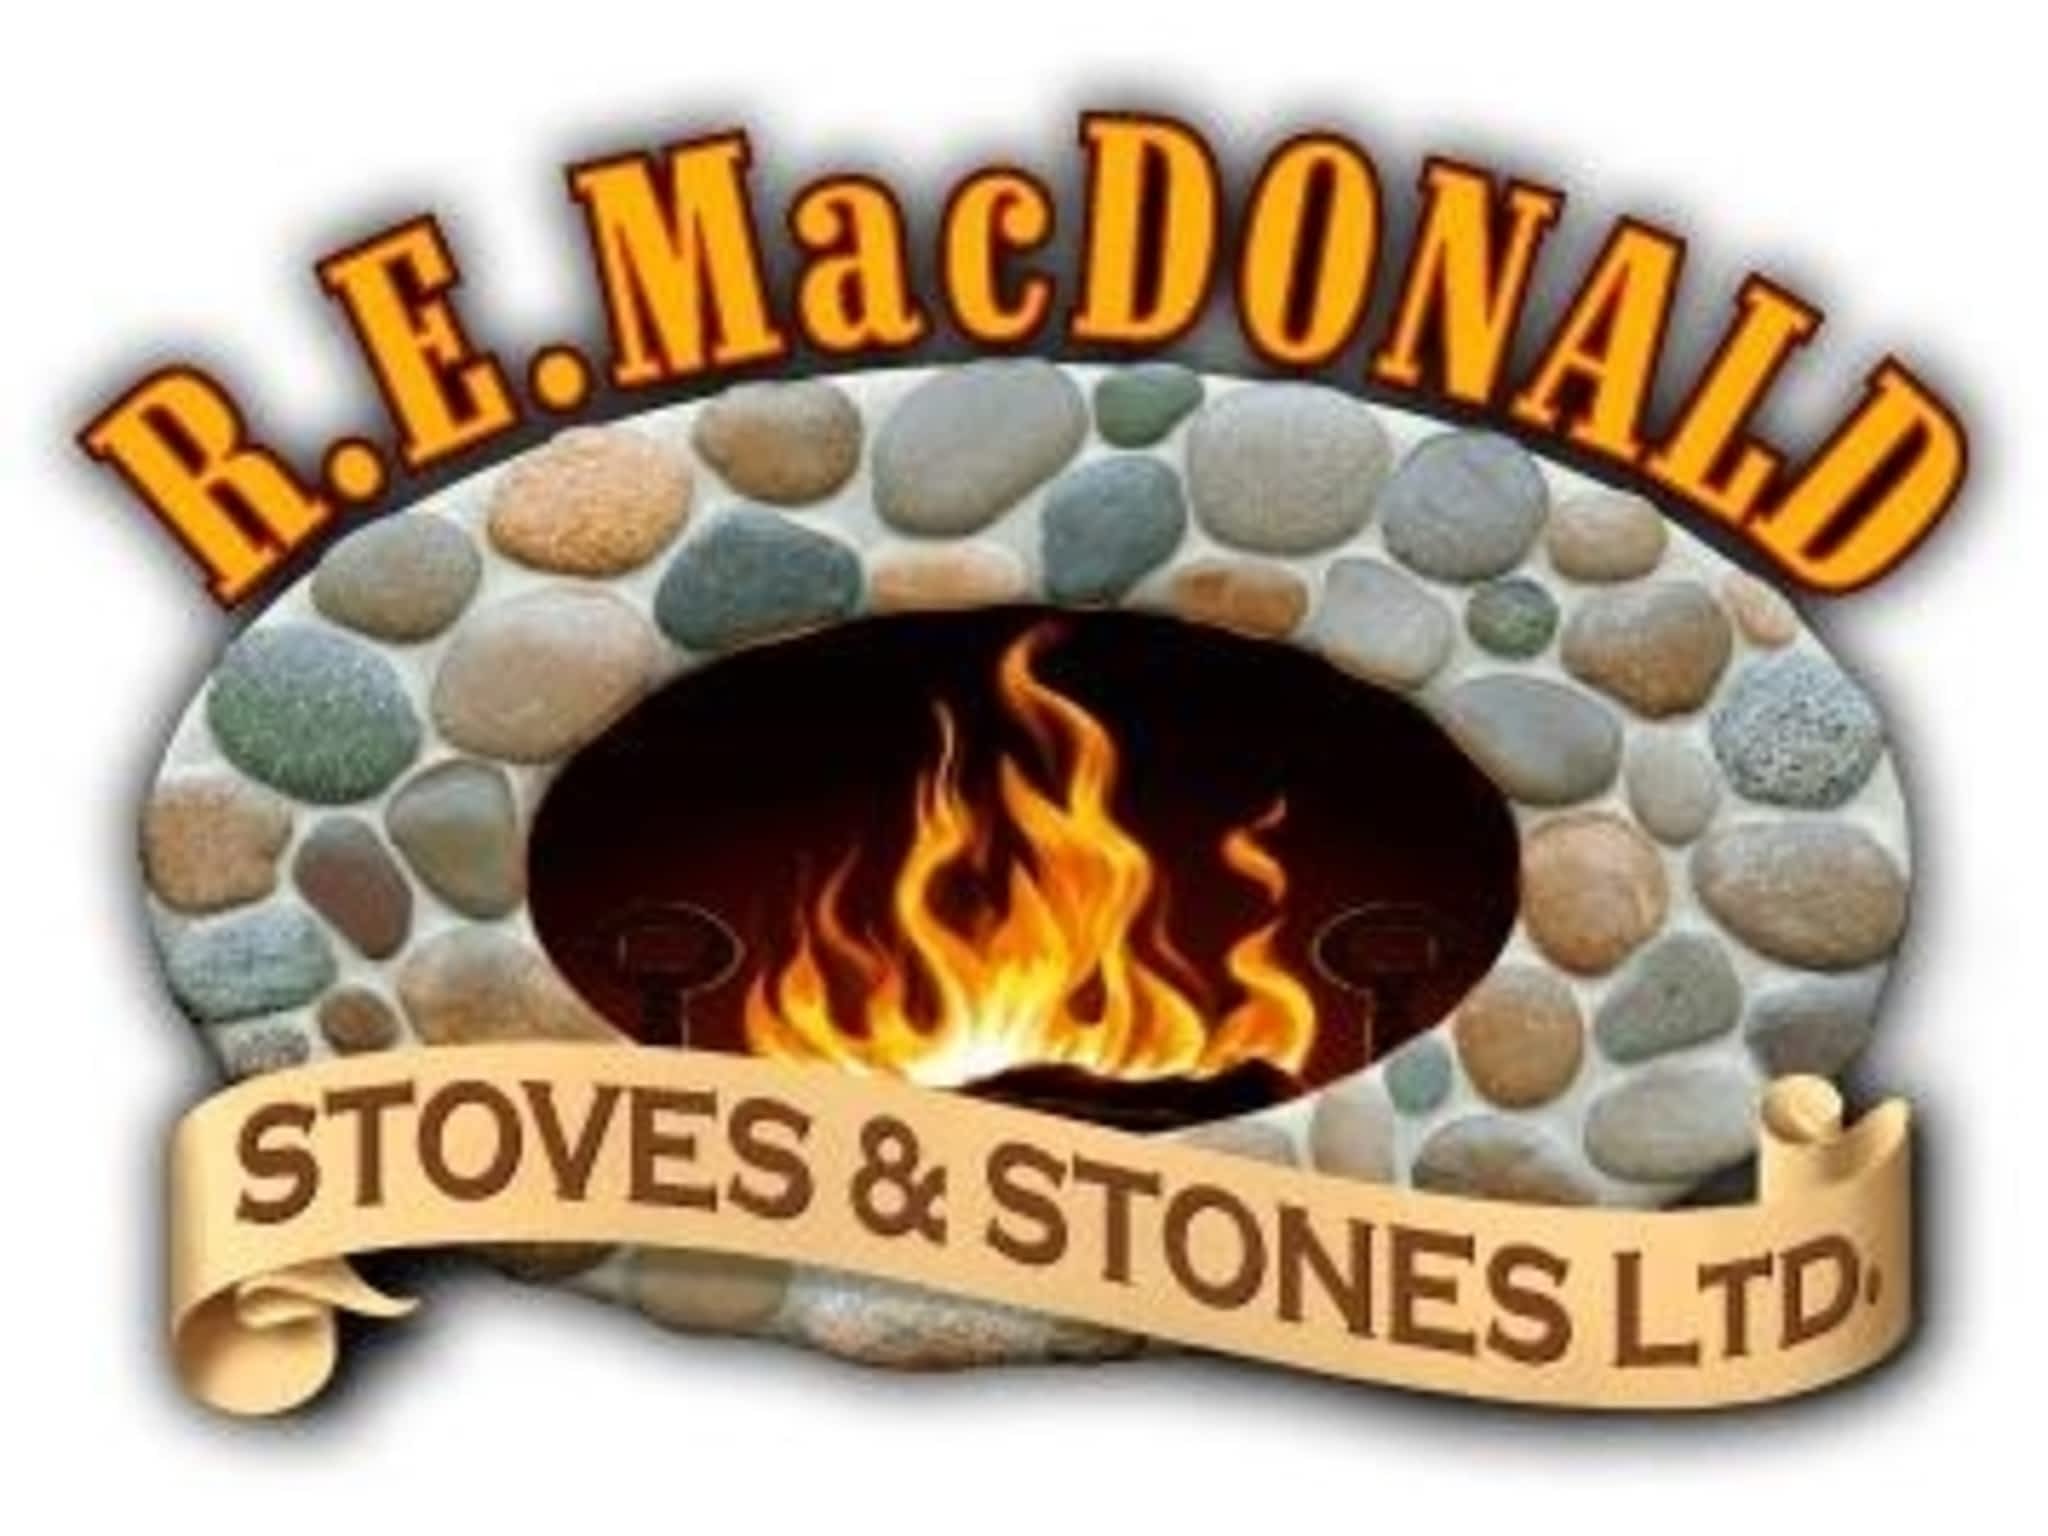 photo RE MacDonald Stoves & Stones LTD